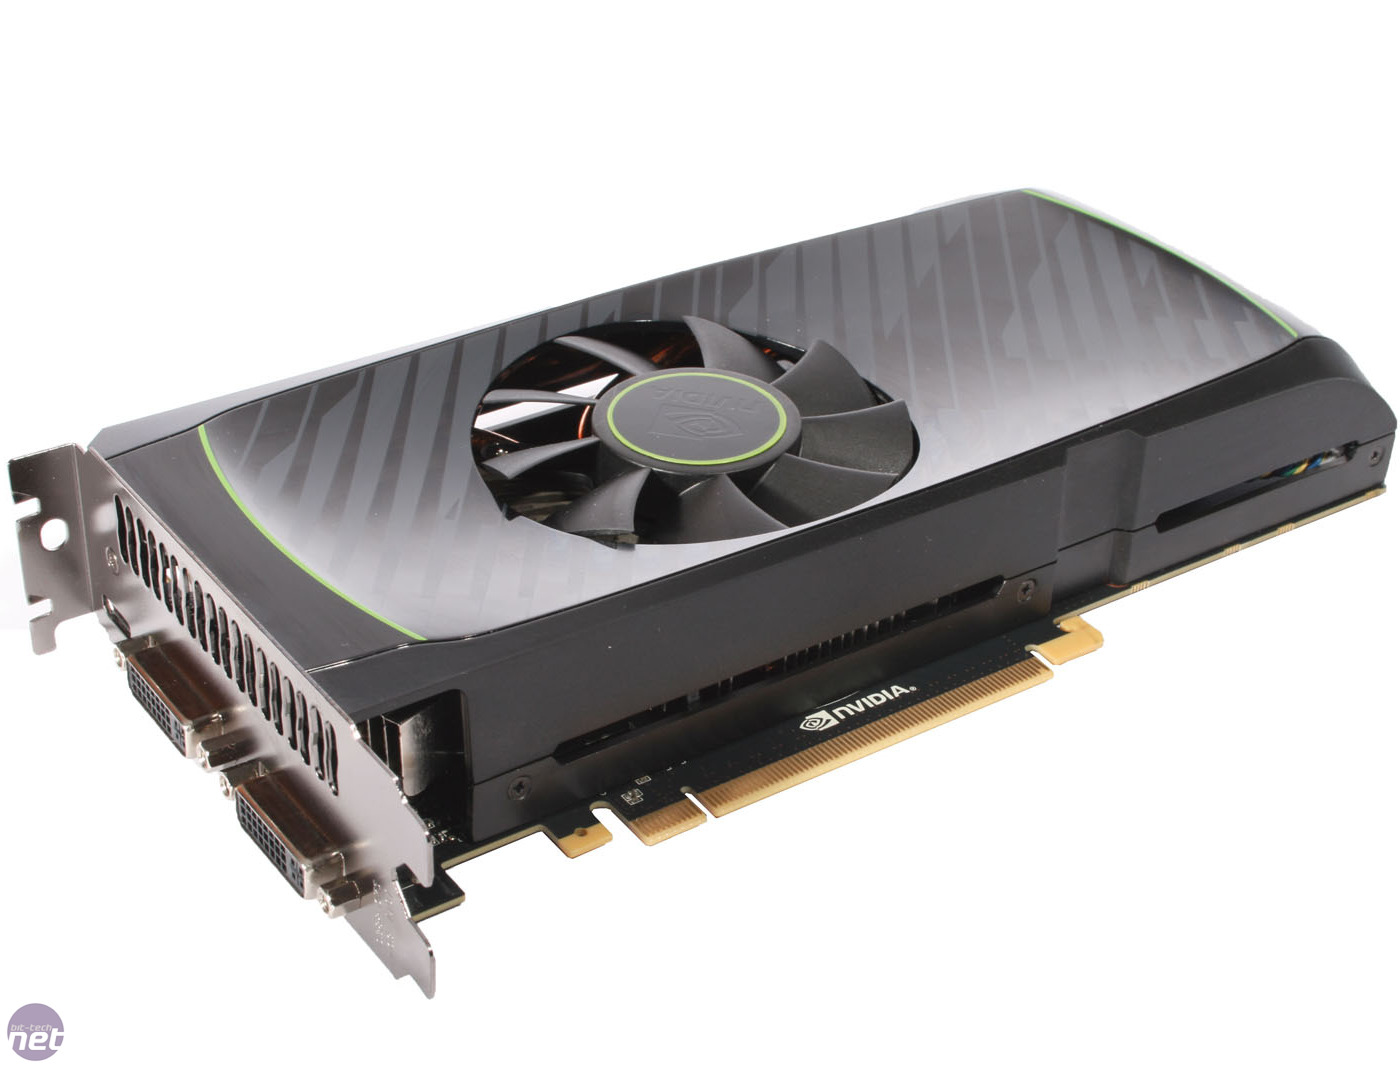 Nvidia GeForce GTX 560 Ti 1GB Review | bit-tech.net